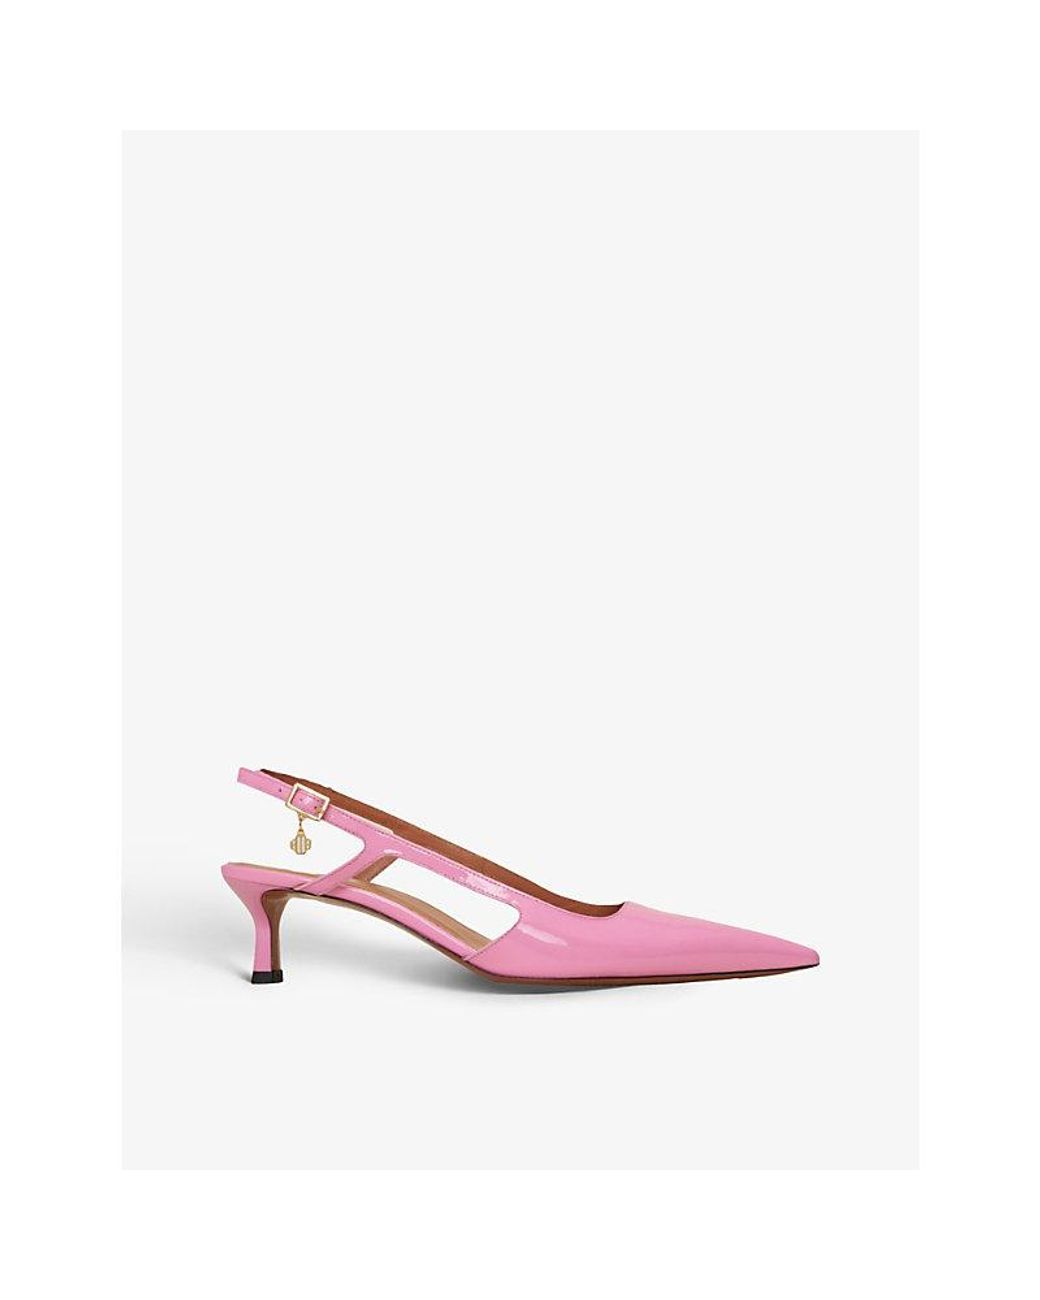 Maje Fayna Patent-leather Kitten Heels in Pink | Lyst